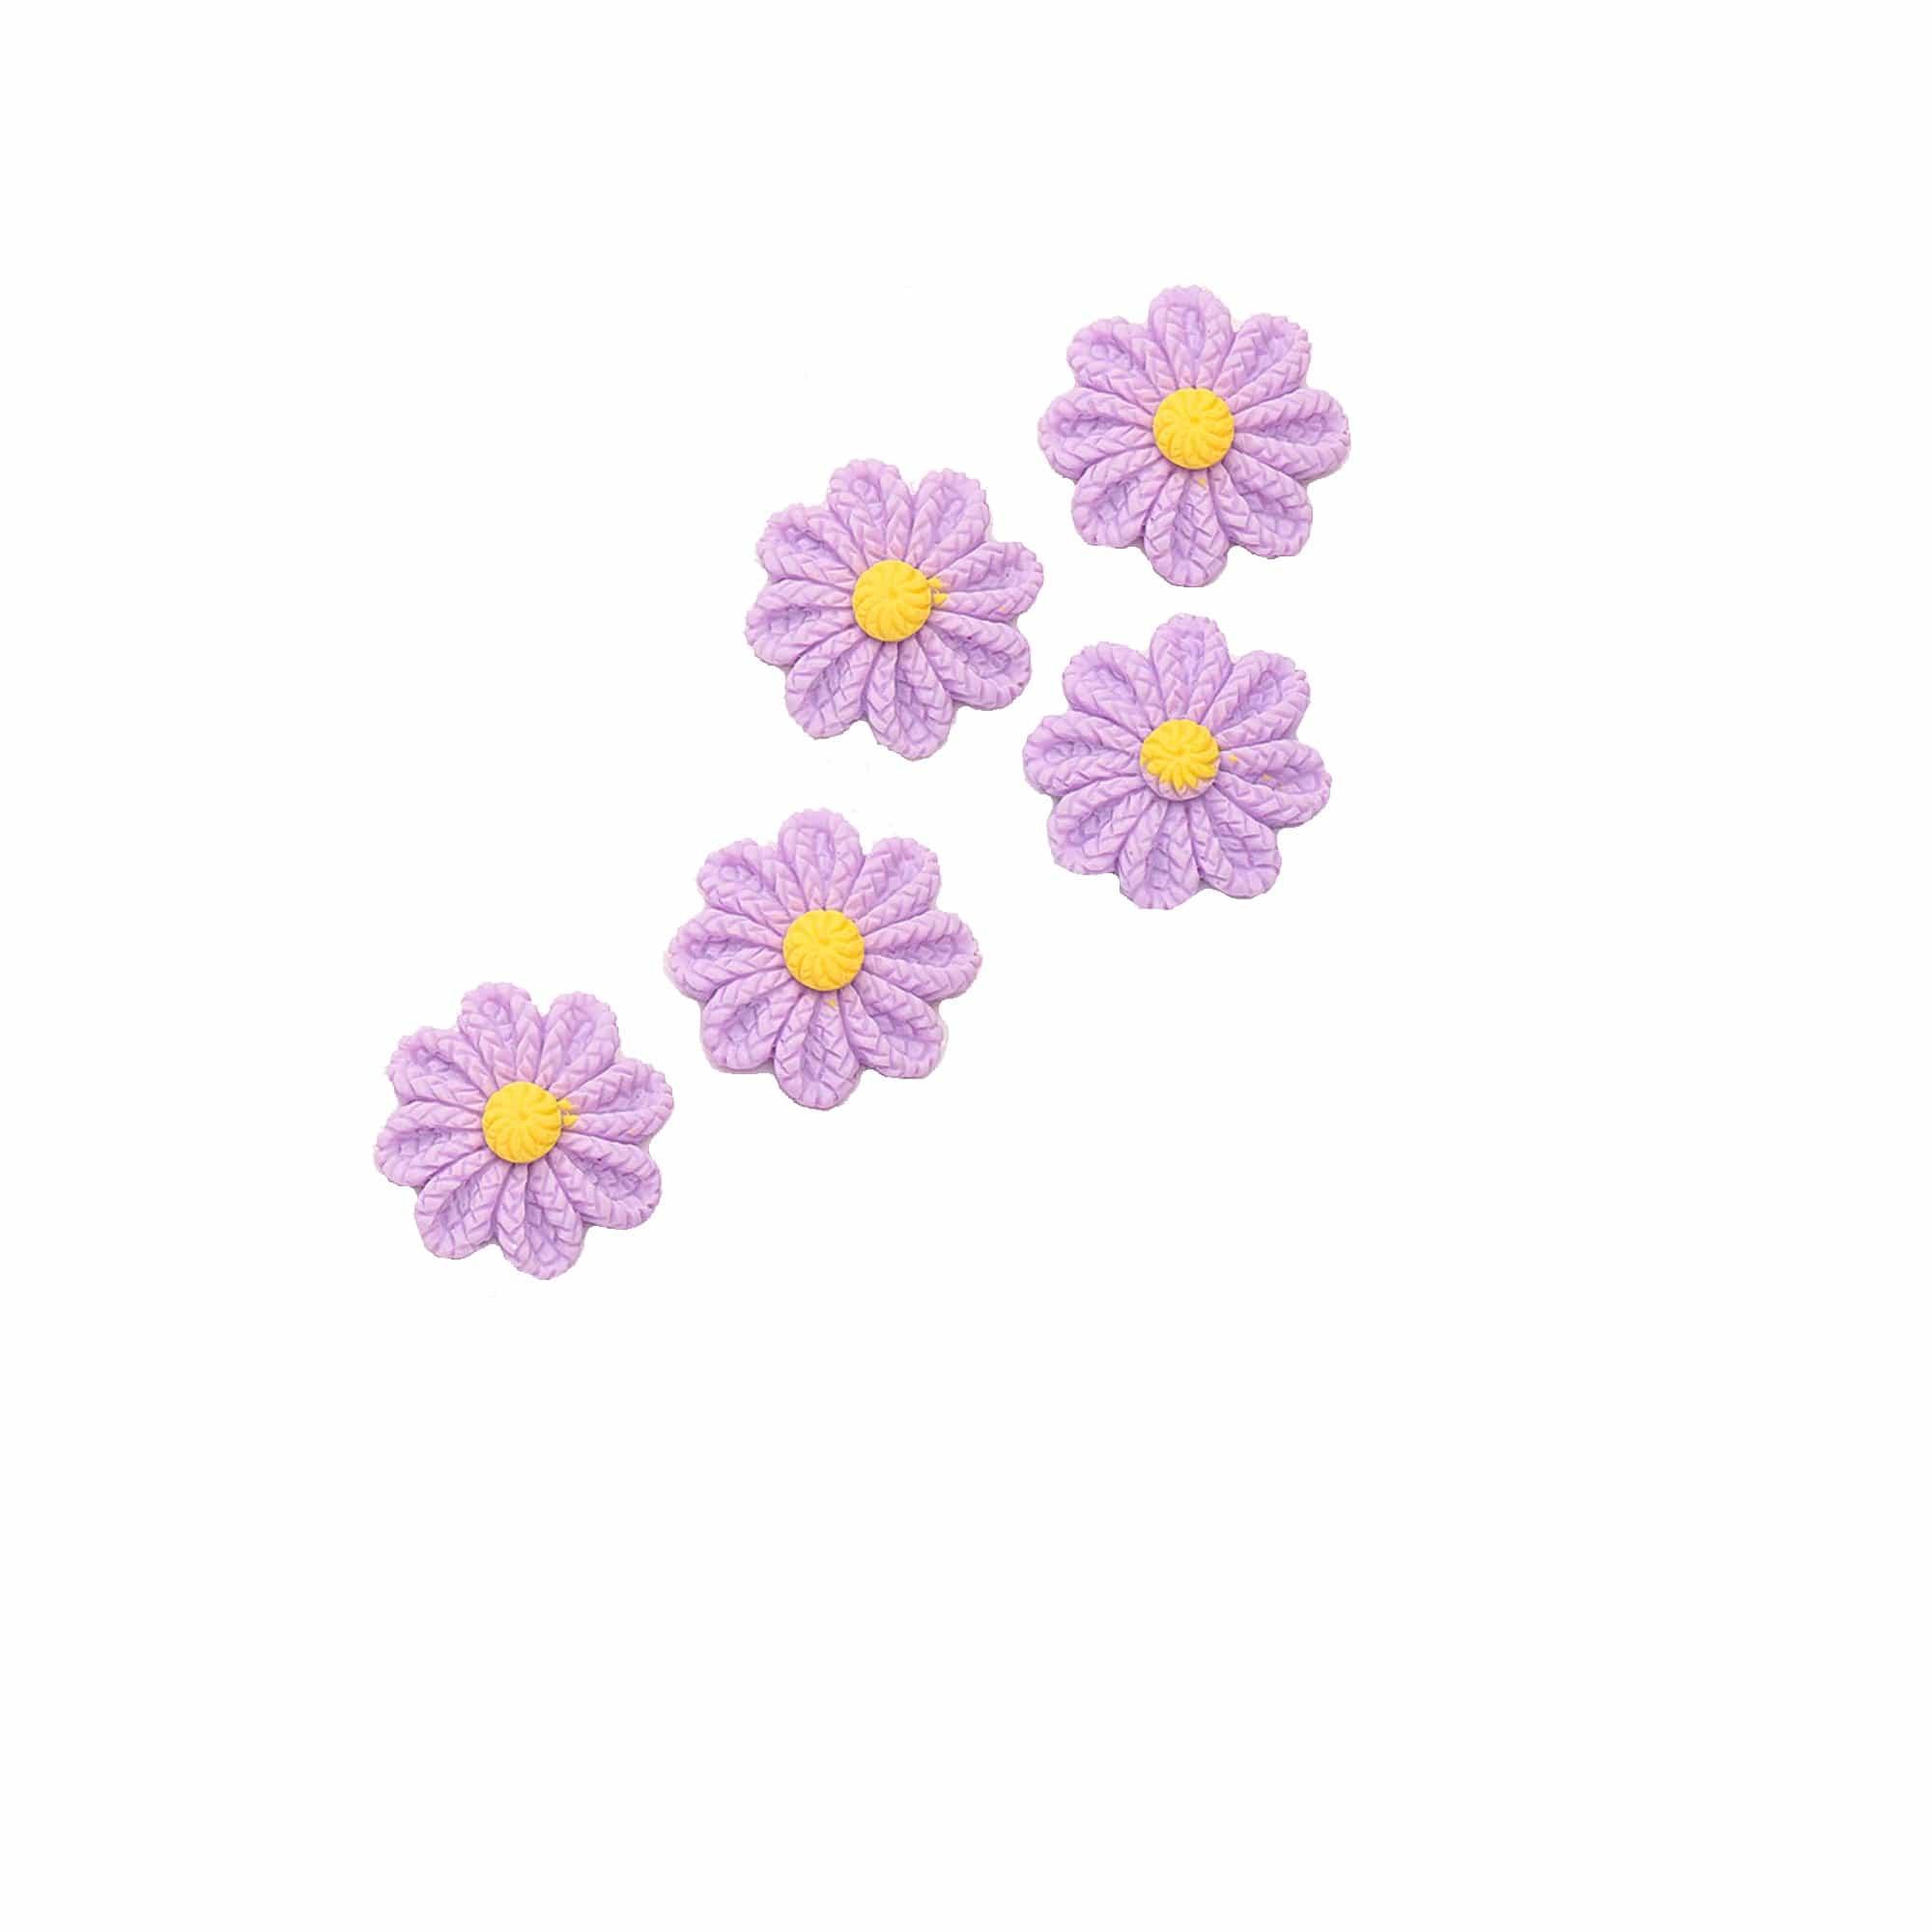 Flower Fun Collection Lavender Flower Flatback Scrapbook Buttons by SSC Designs - Pkg. of 5